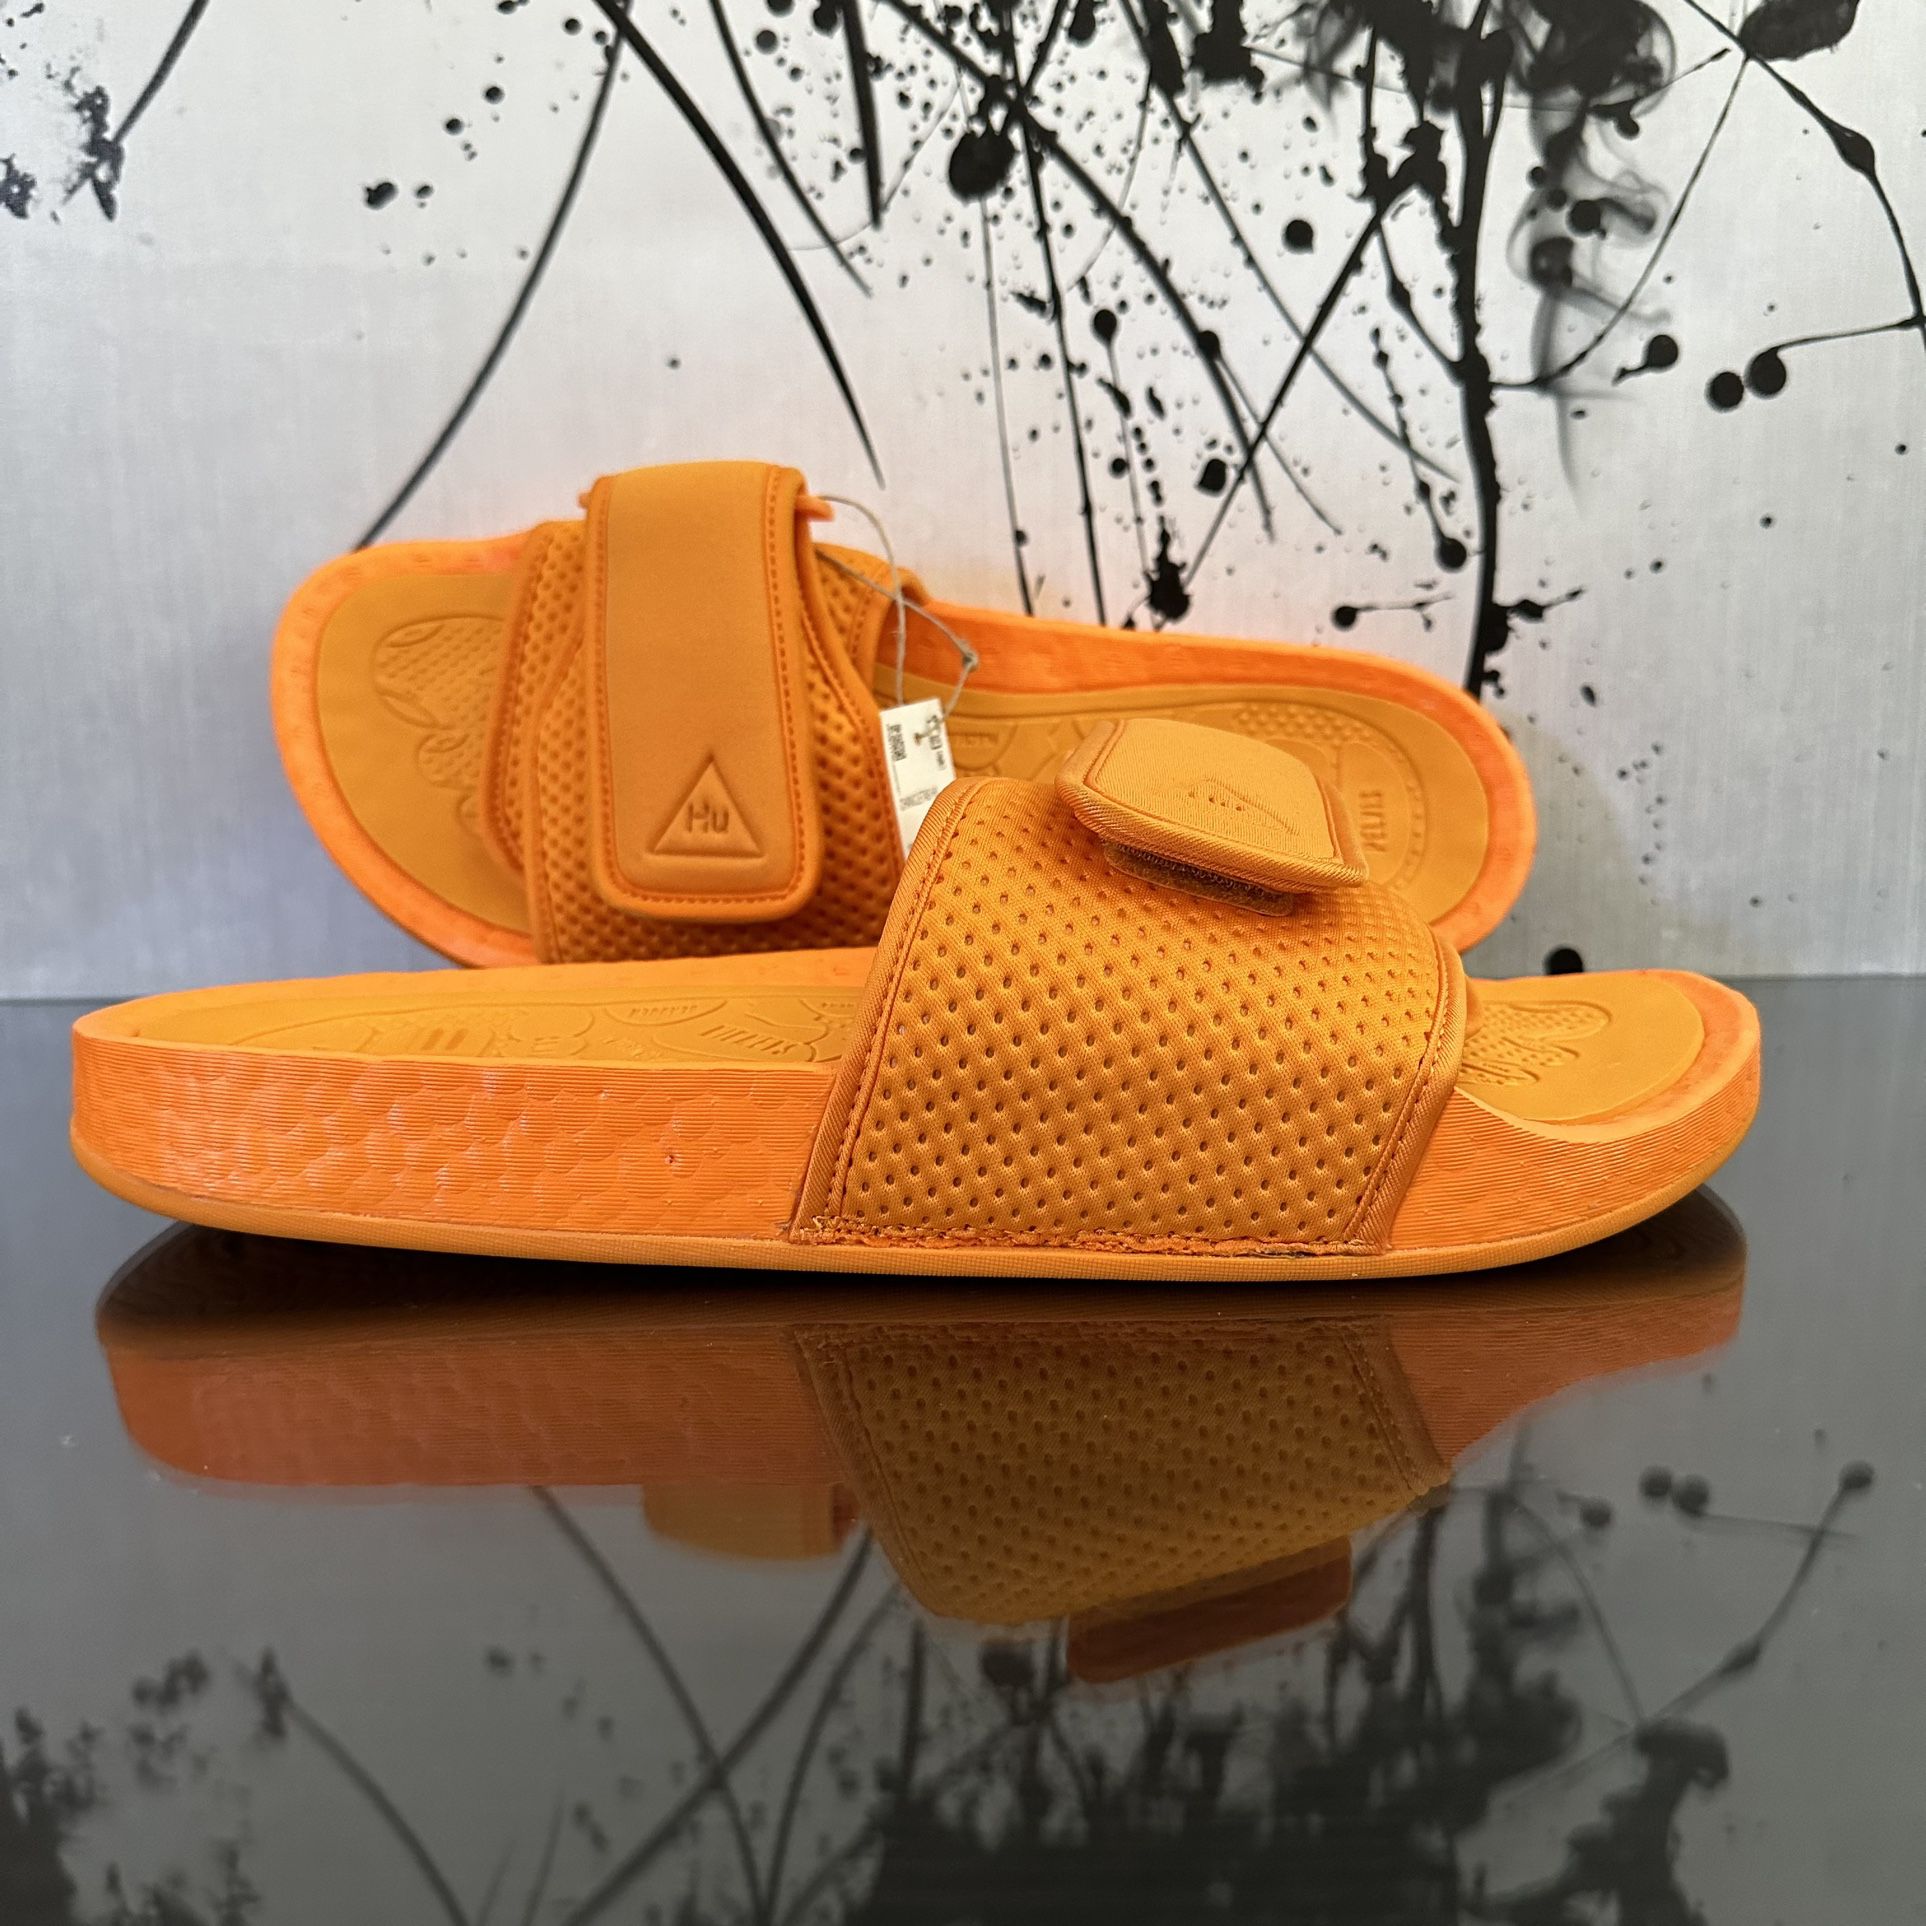 Adidas Boost x Pharrell  Slides Bright Orange Mens Size 10 or 11 FV7261 Chancletas HU